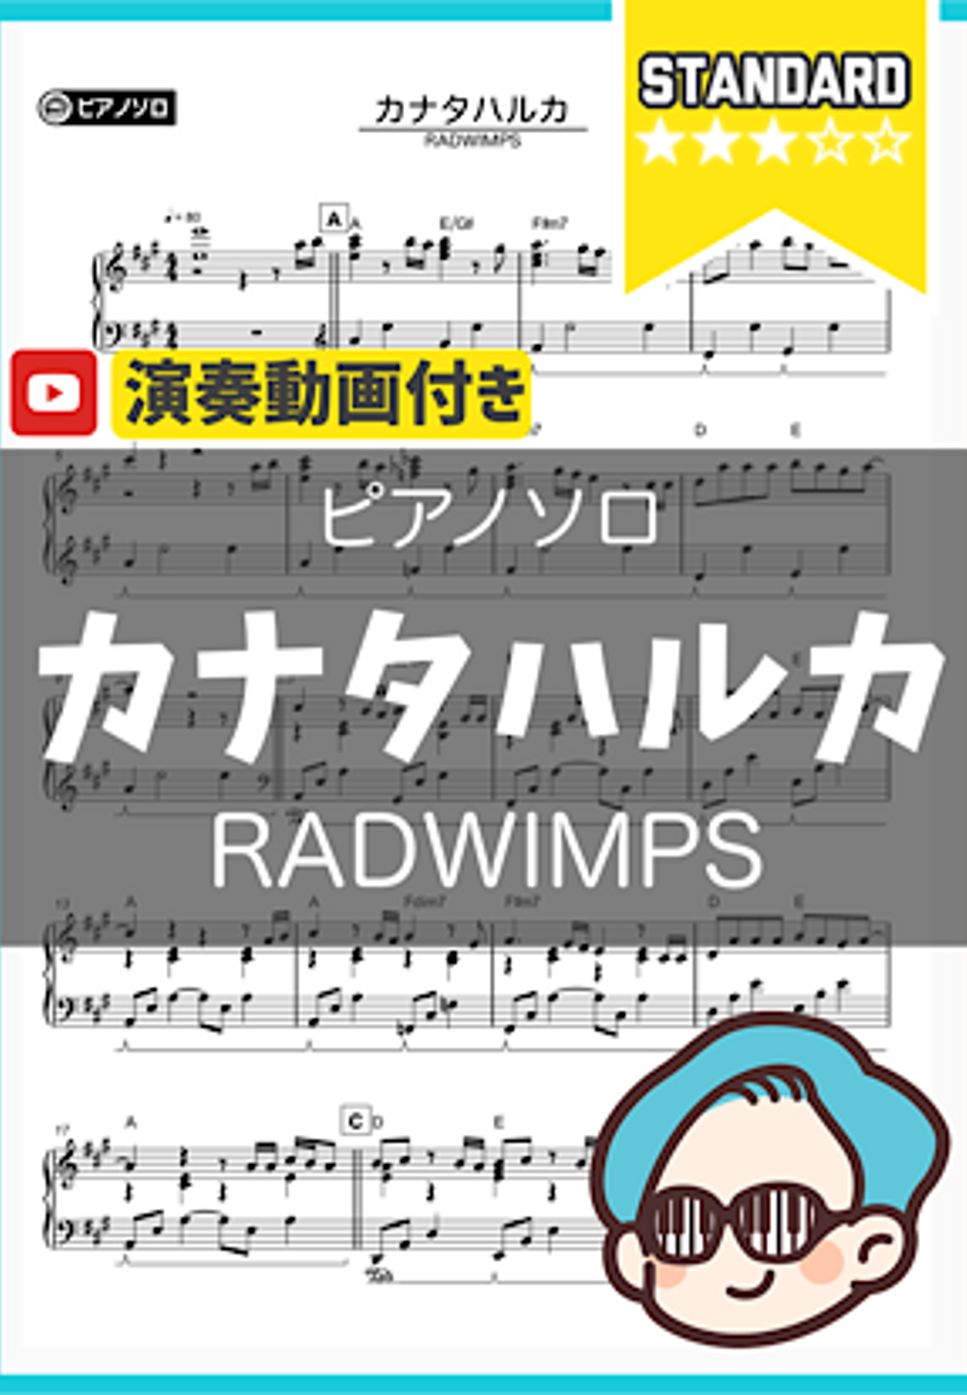 RADWIMPS - カナタハルカ by シータピアノ